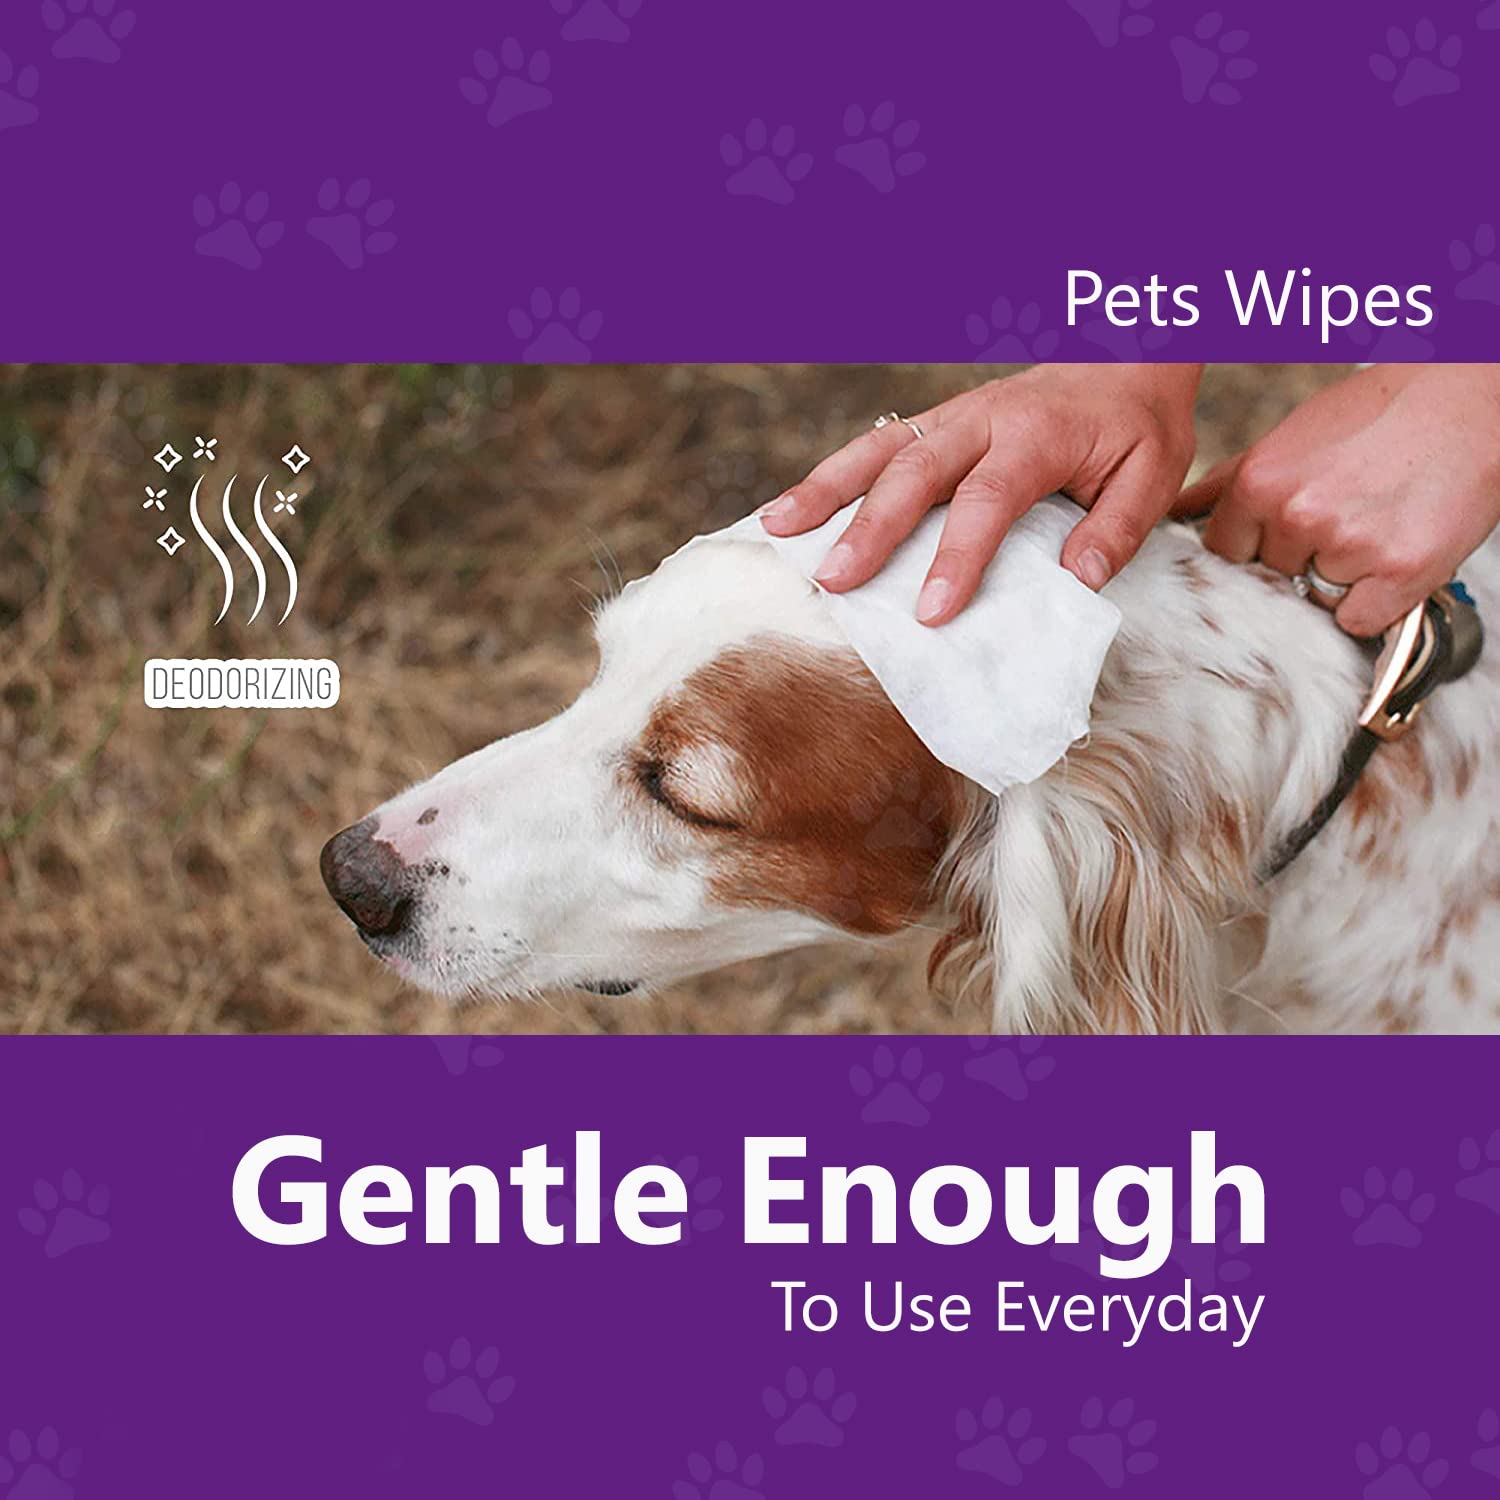 Hygiene Pet wipes